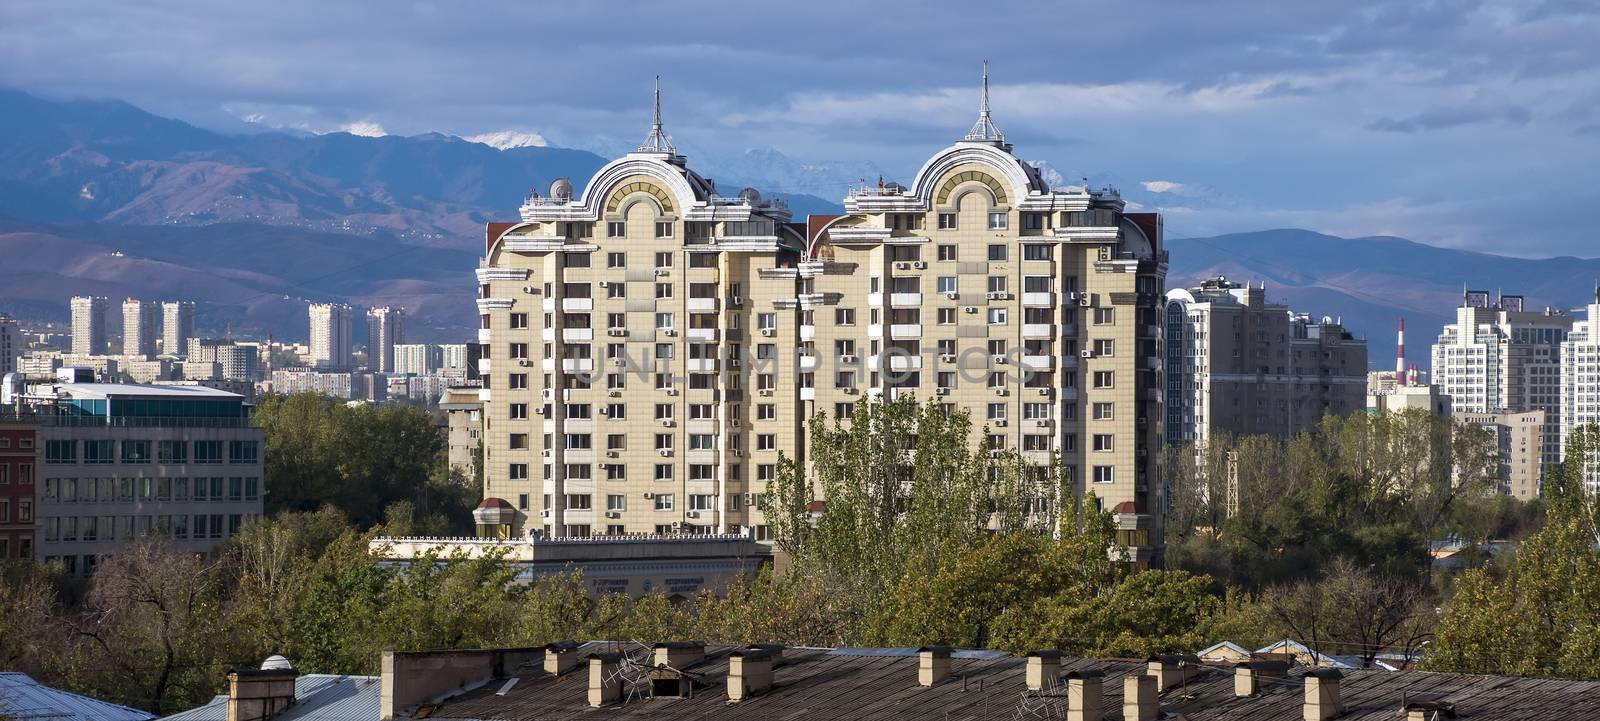 Almaty - Modern architecture by Venakr